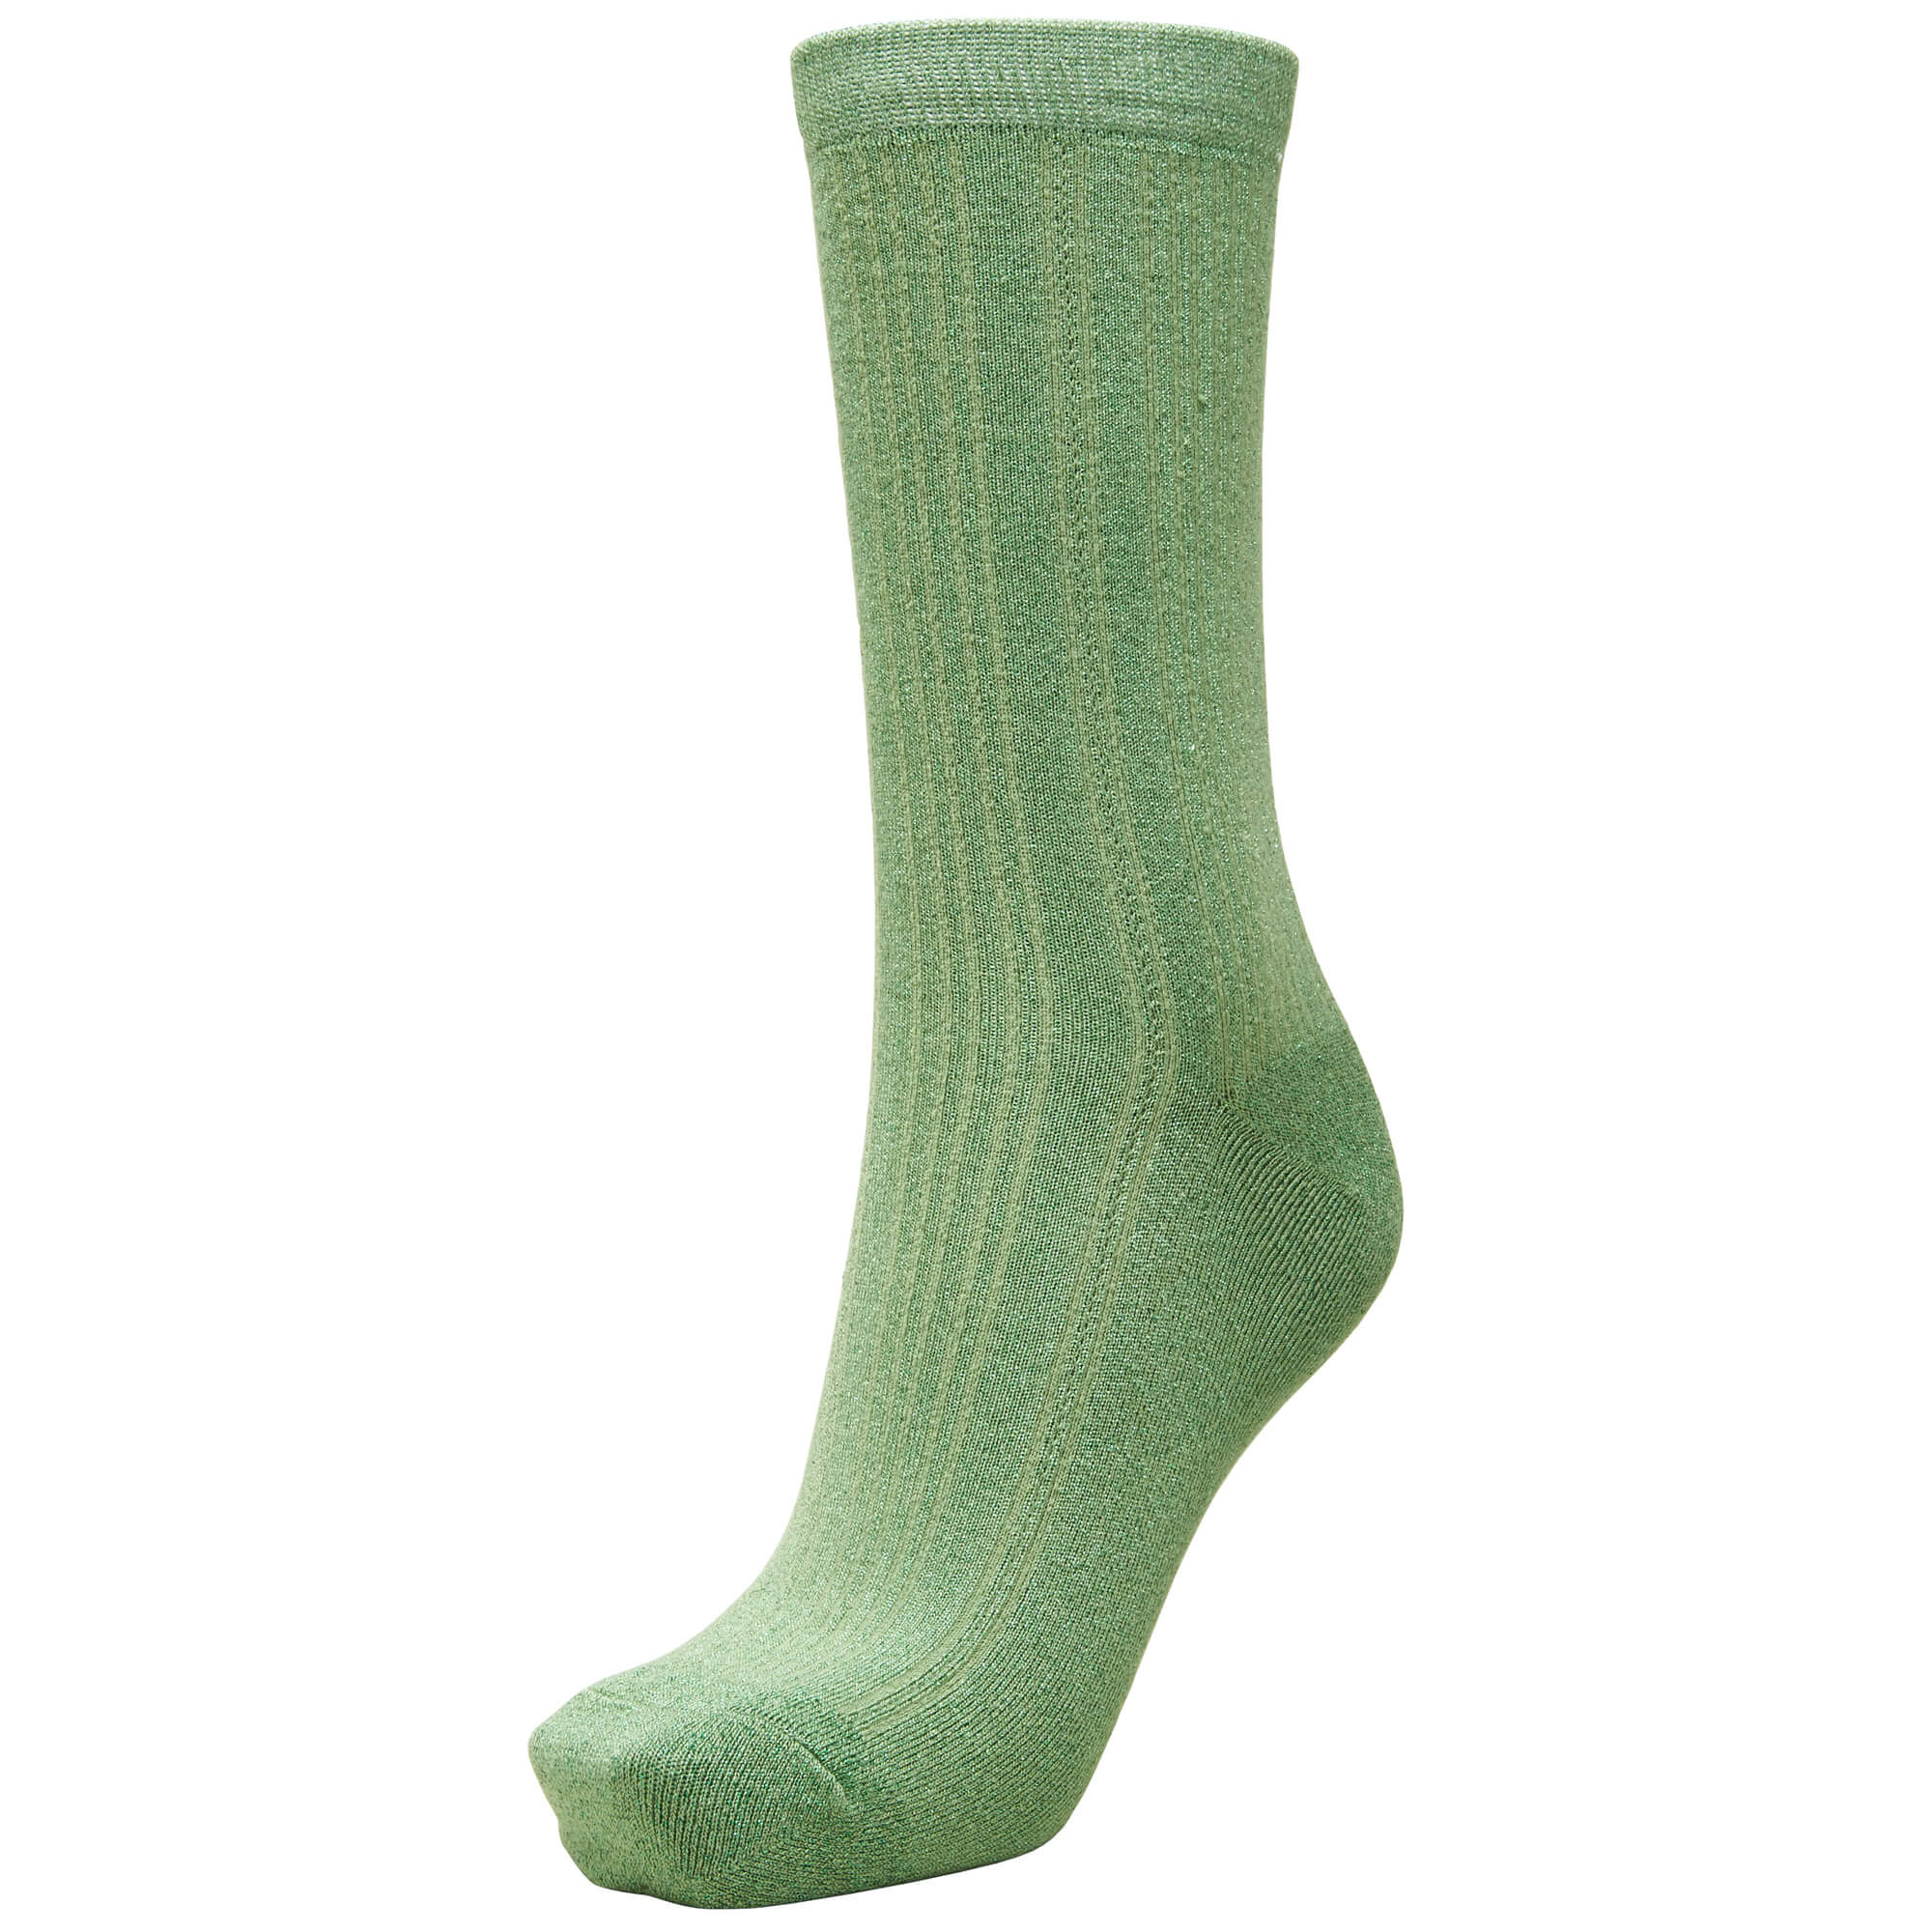 SLF Lana socks in watercress